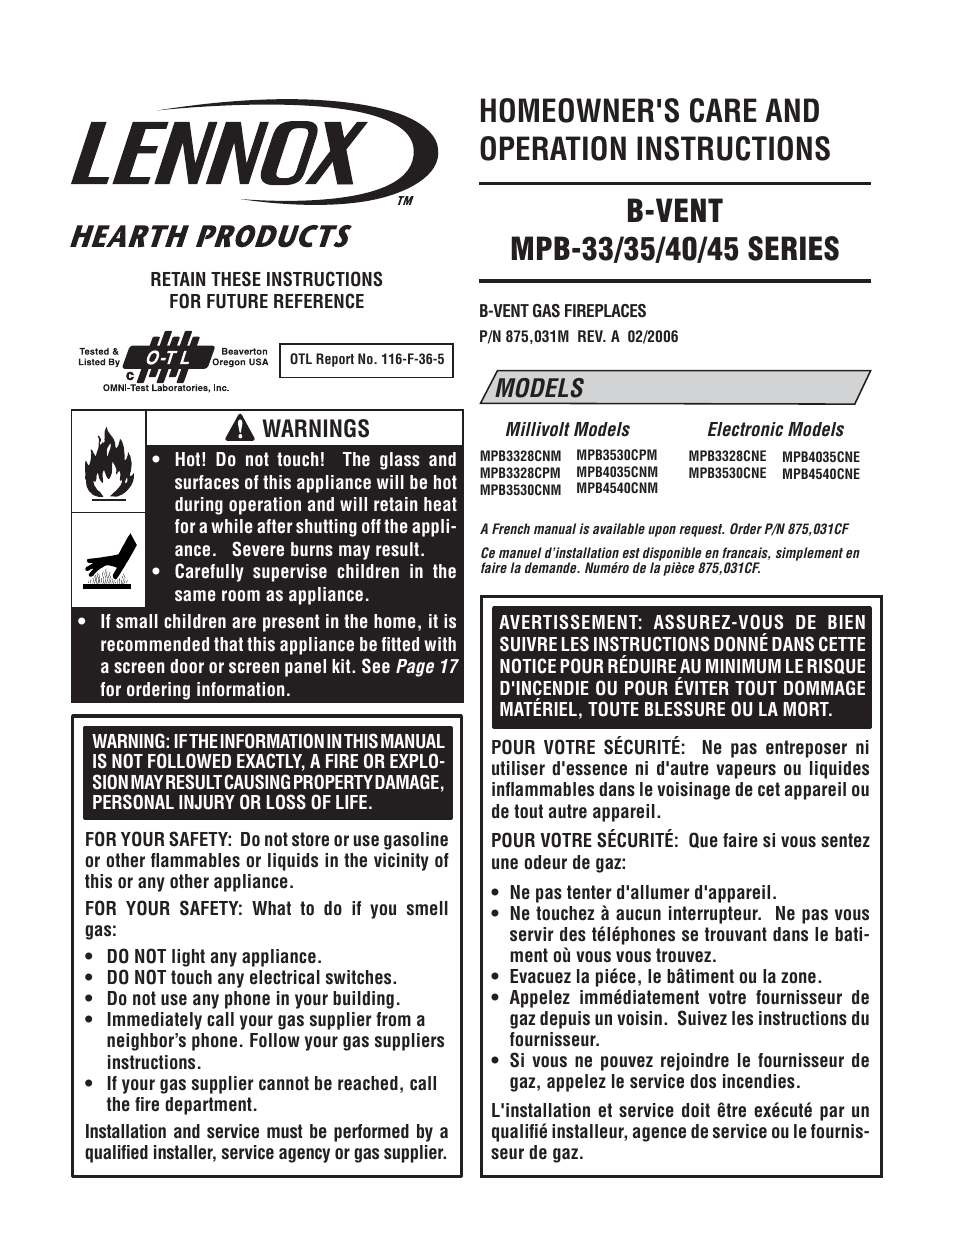 LG LENNOX MPB3328CNE User Manual | 28 pages